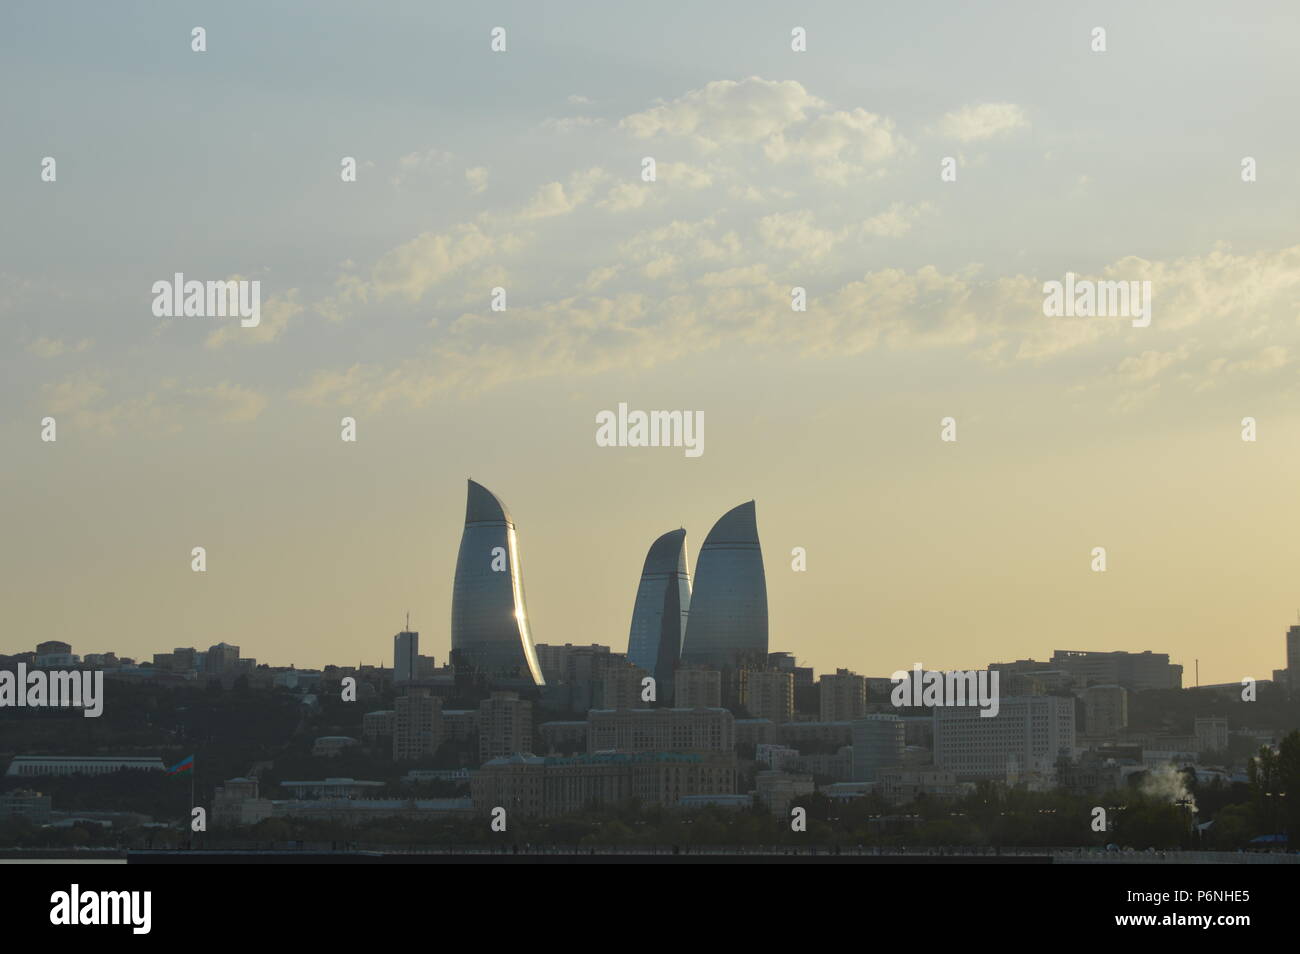 Flaming Towers of Baku, Azerbaijan. Taken from Nikon during my first trip to Baku in Summer of 2015. Travel Photography in Baku. Stock Photo